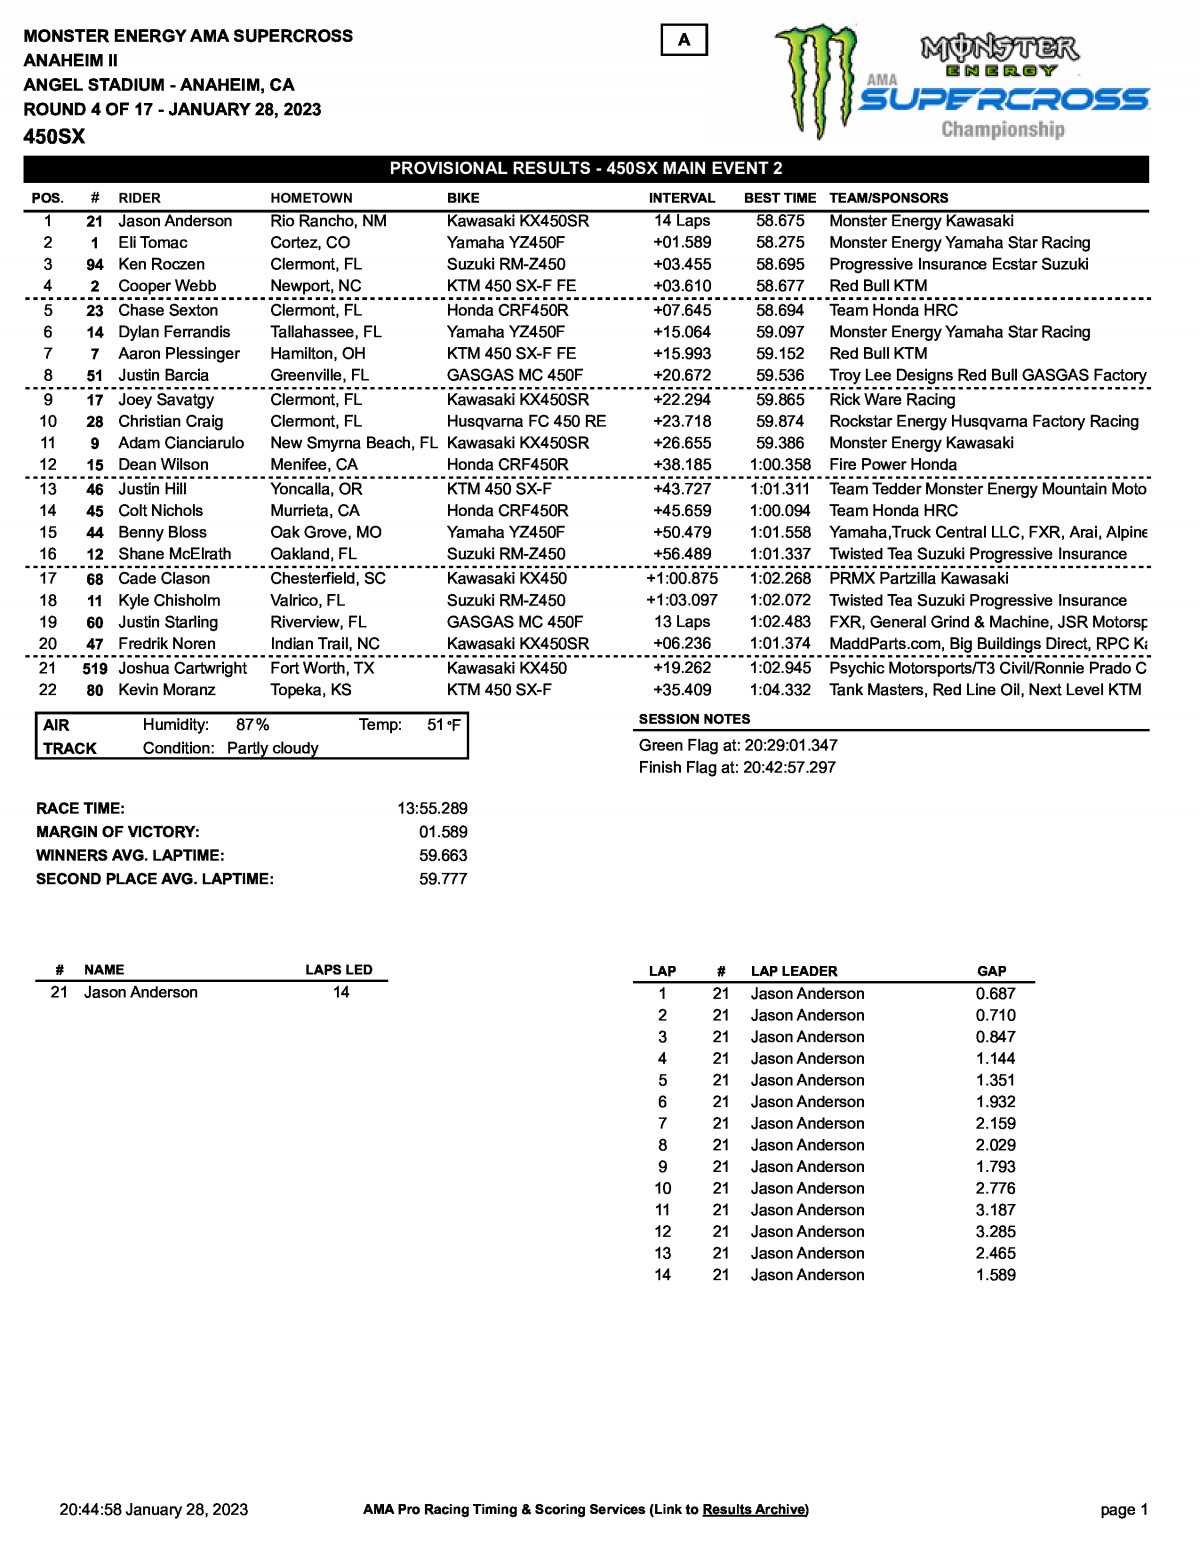 AMA Supercross - Результаты 2 заезда Triple Crown 450SX Anaheim-2 (2023)